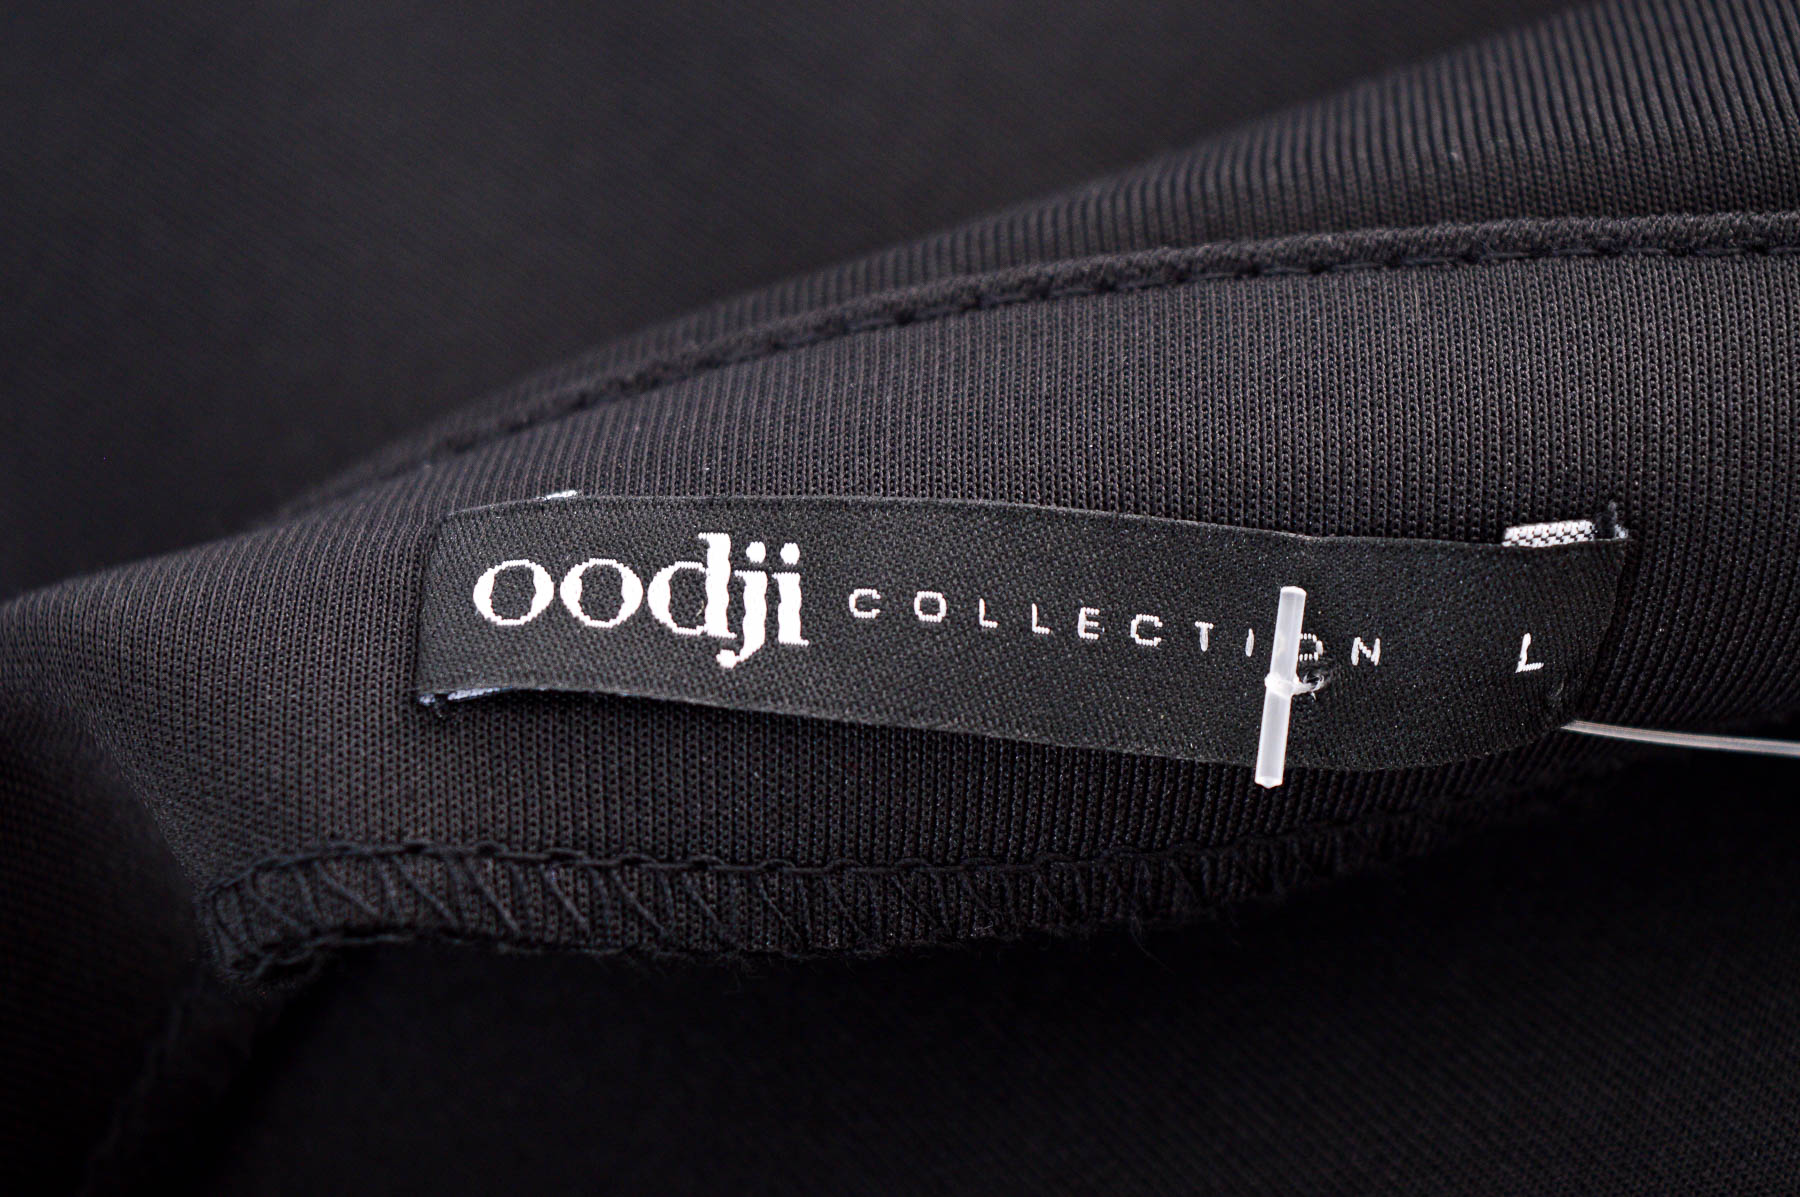 Spódnica - Oodji Collection - 2